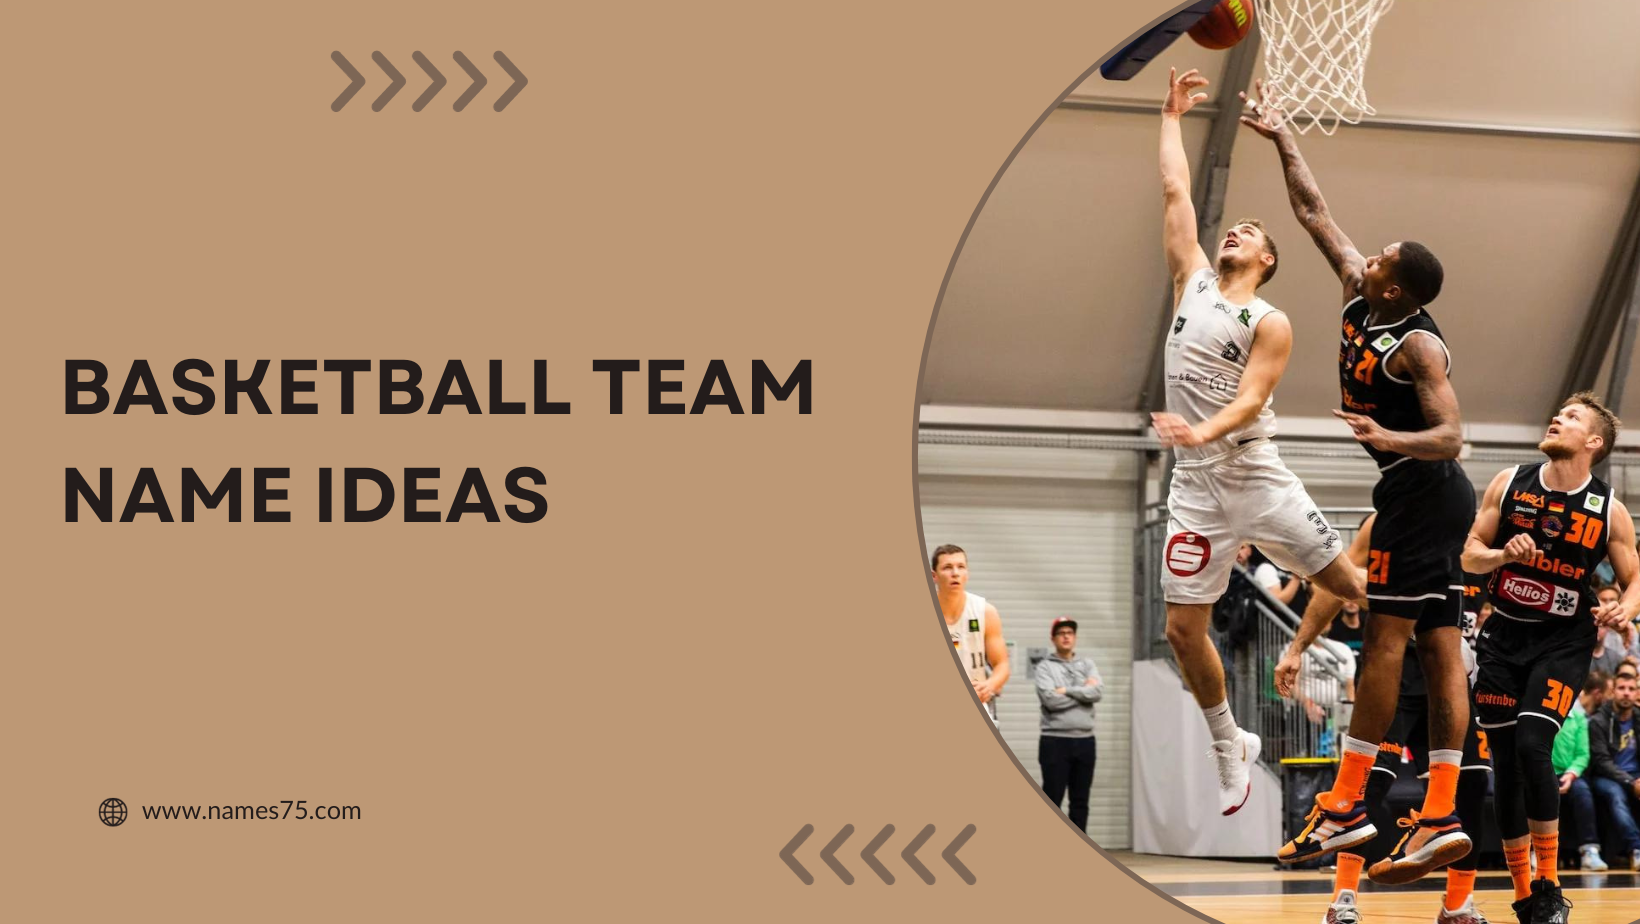 Basketball team name ideas